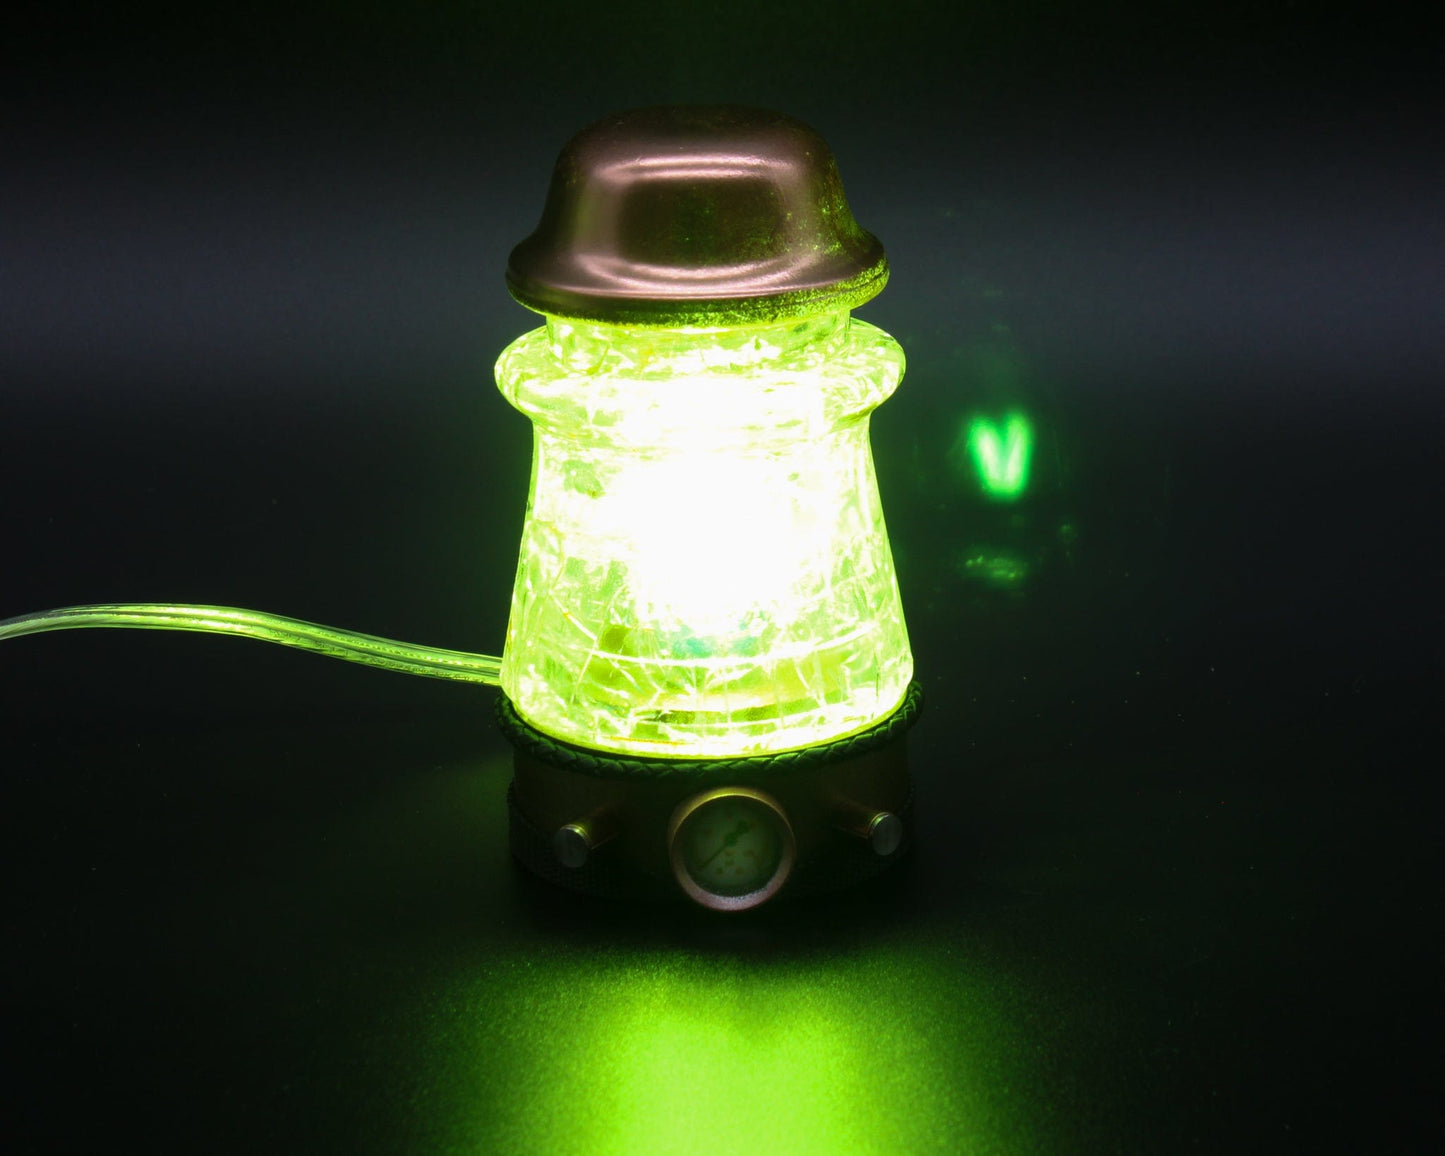 LightAndTimeArt Steampunk Lamp Steampunk “Crackle Glass" Insulator Lamp, Aluminum Base, Hemingray-16, Industrial Lighting, Man Cave Deco, Neo Victorian Lamp design, Cyberpunk Lamp